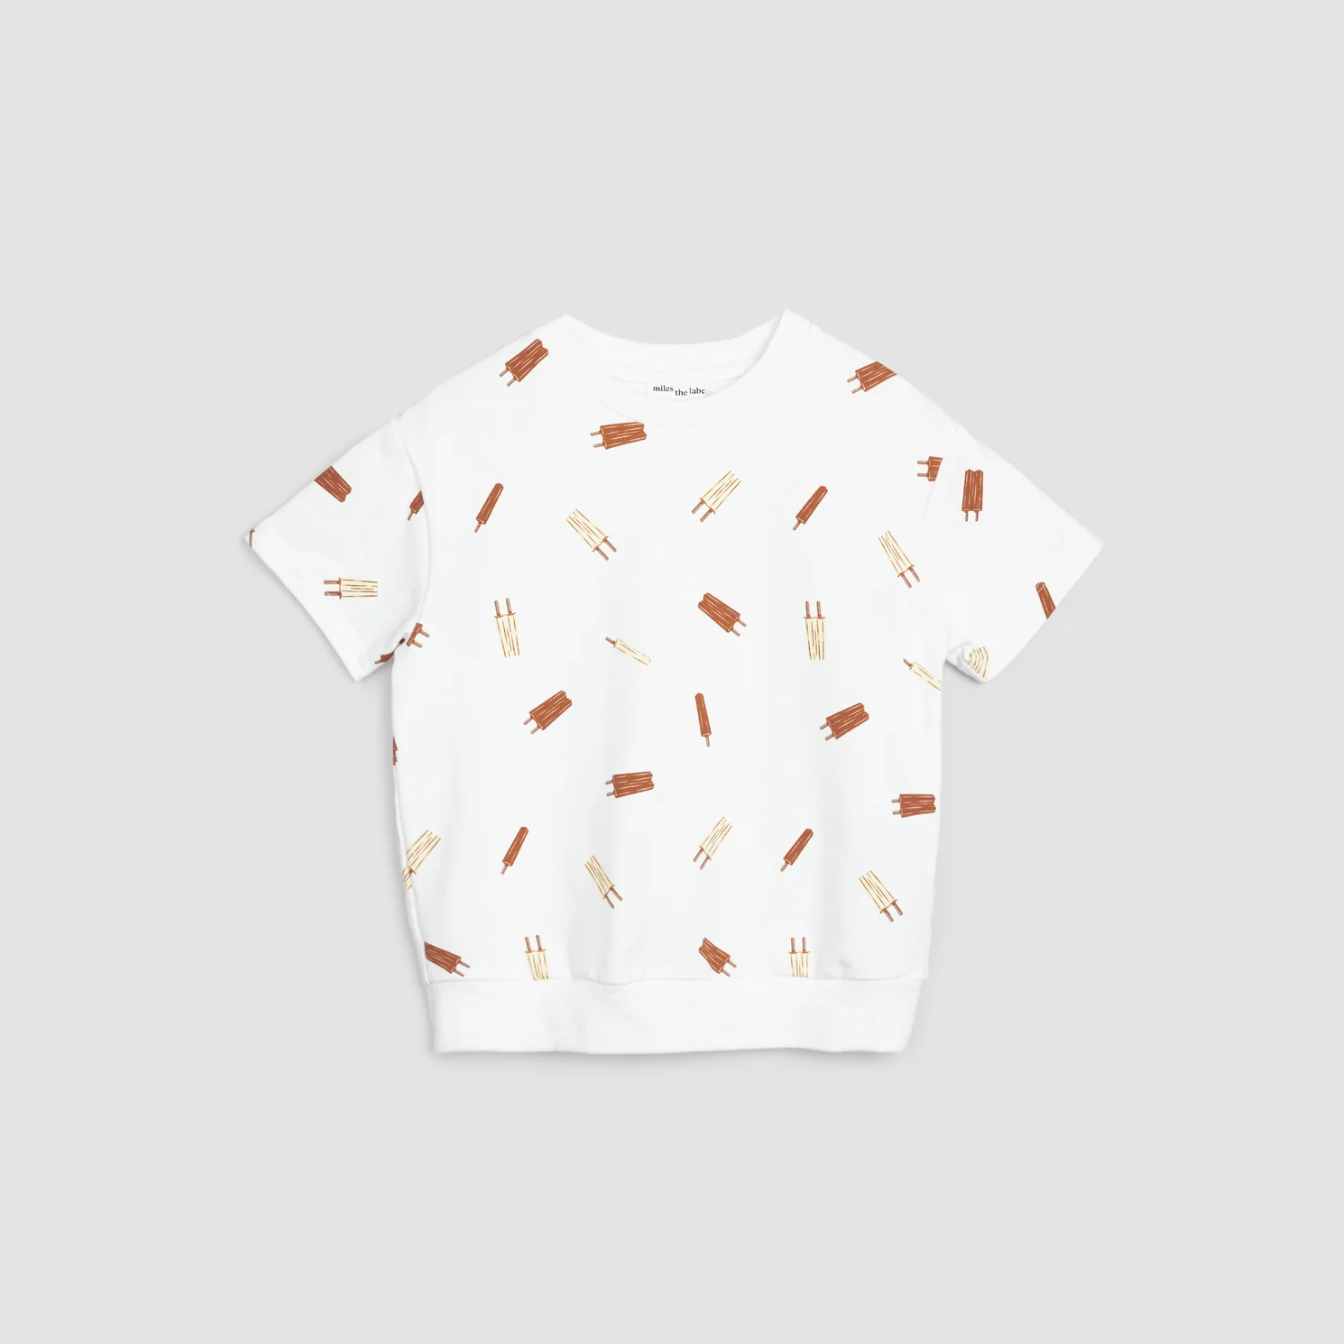 Popsicle Print on Off-White Short-Sleeve Sweatshirt